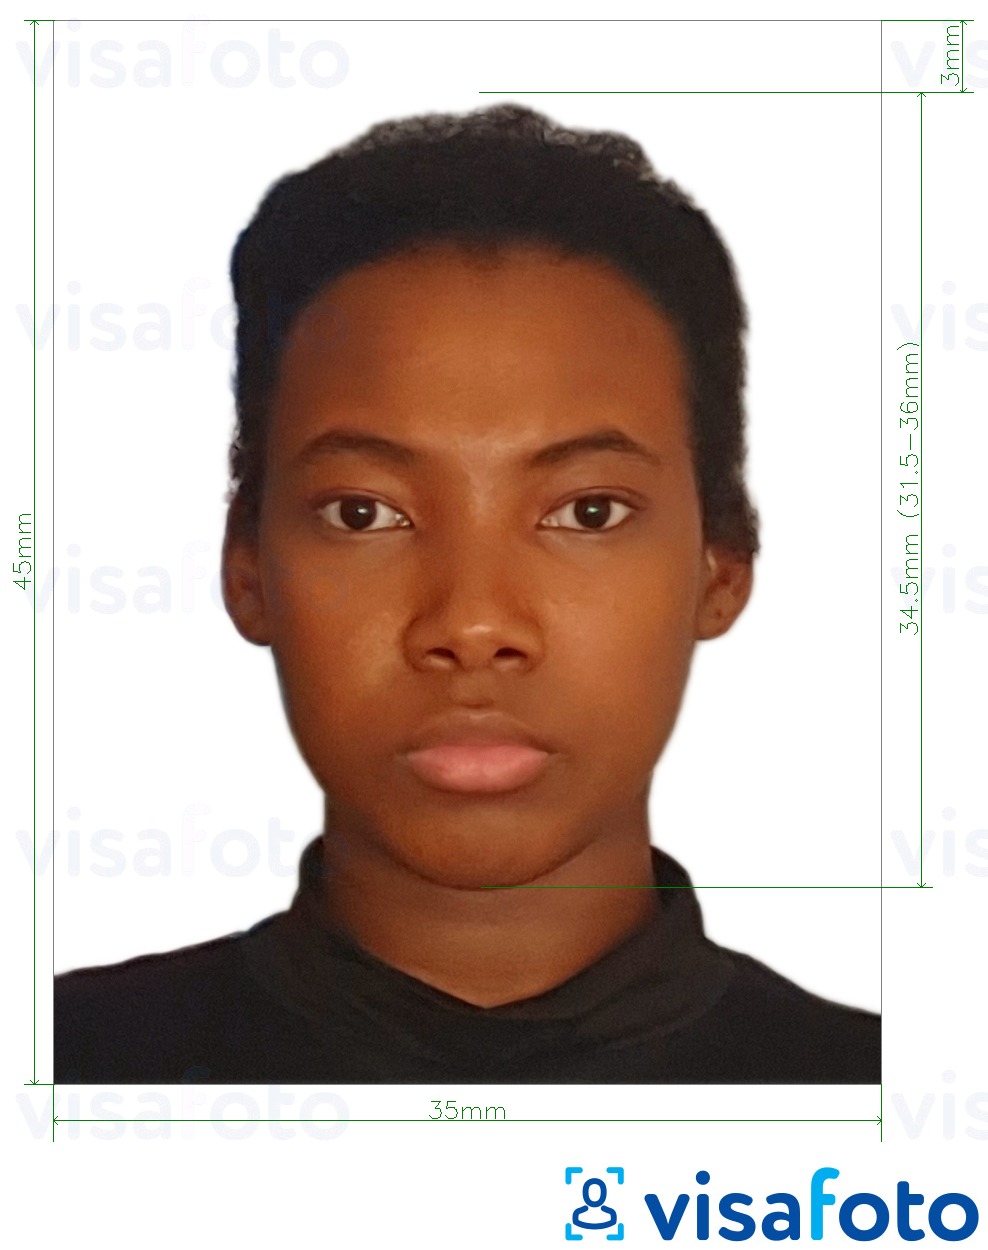 Contoh foto untuk Pasport Fiji 35x45 mm (3.5x4.5 cm) dengan spesifikasi saiz yang tepat.